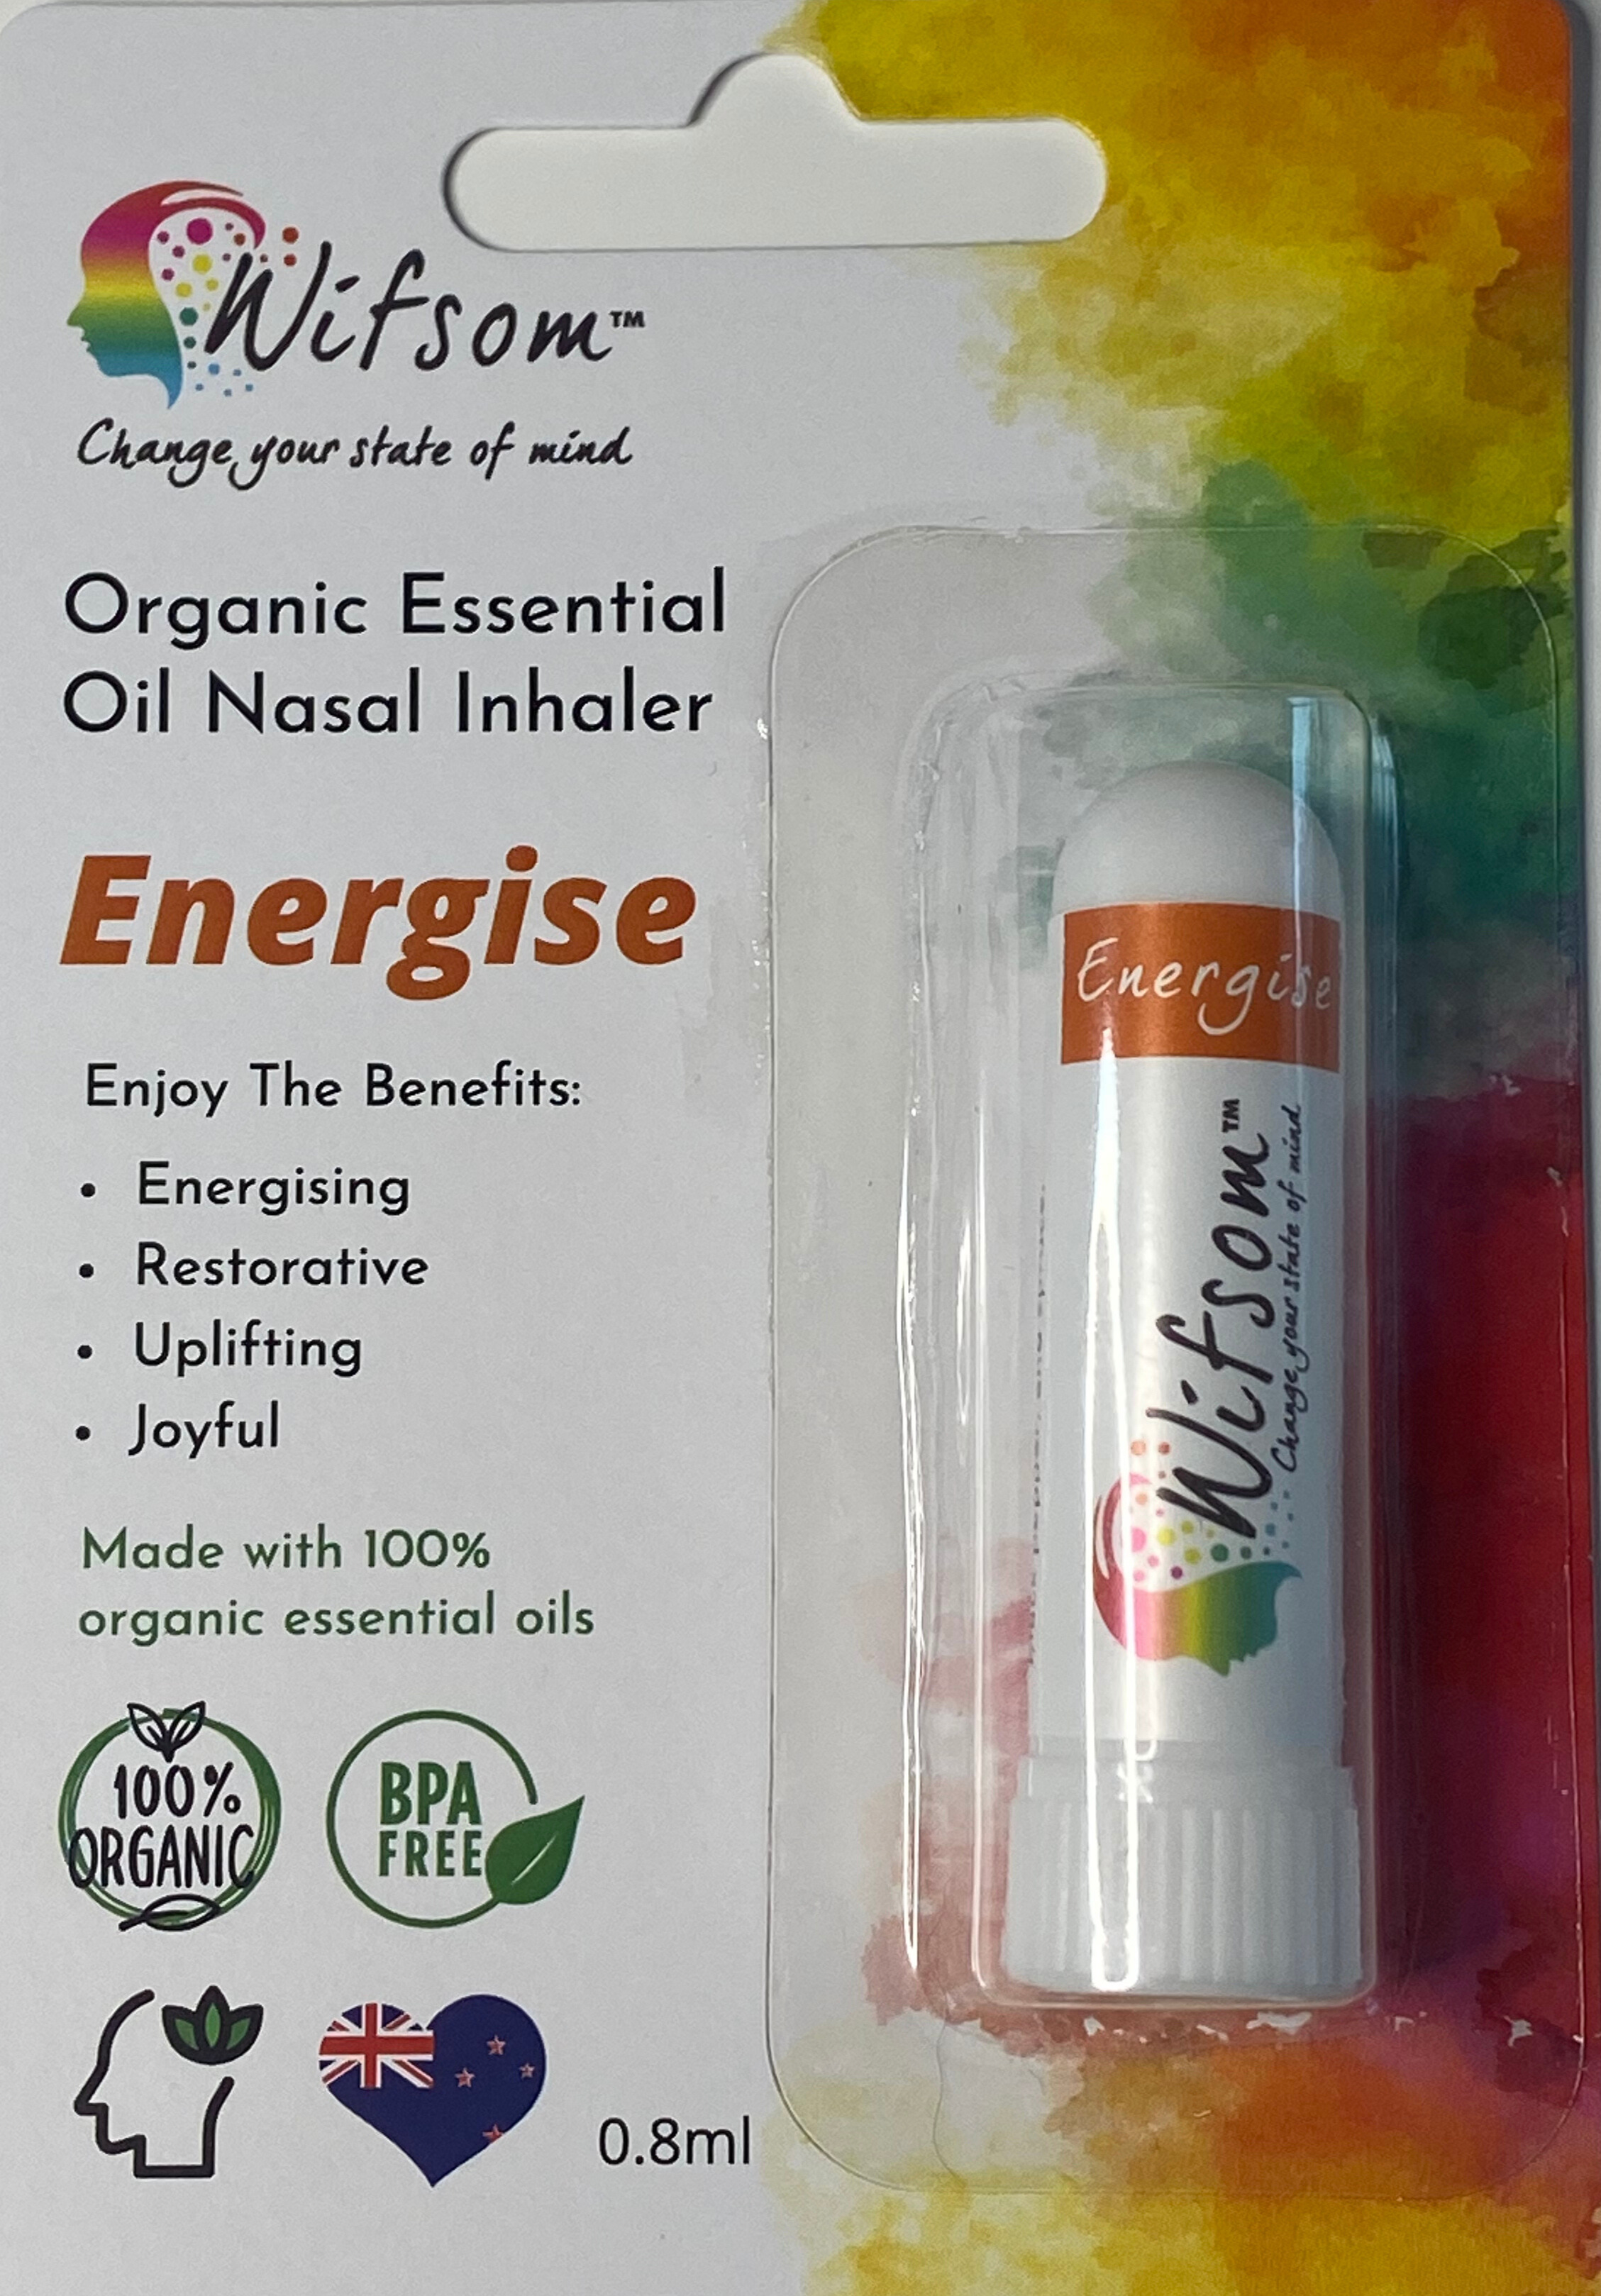 Wifsom Energise Aromatherapy Nasal Inhaler "Motivational"